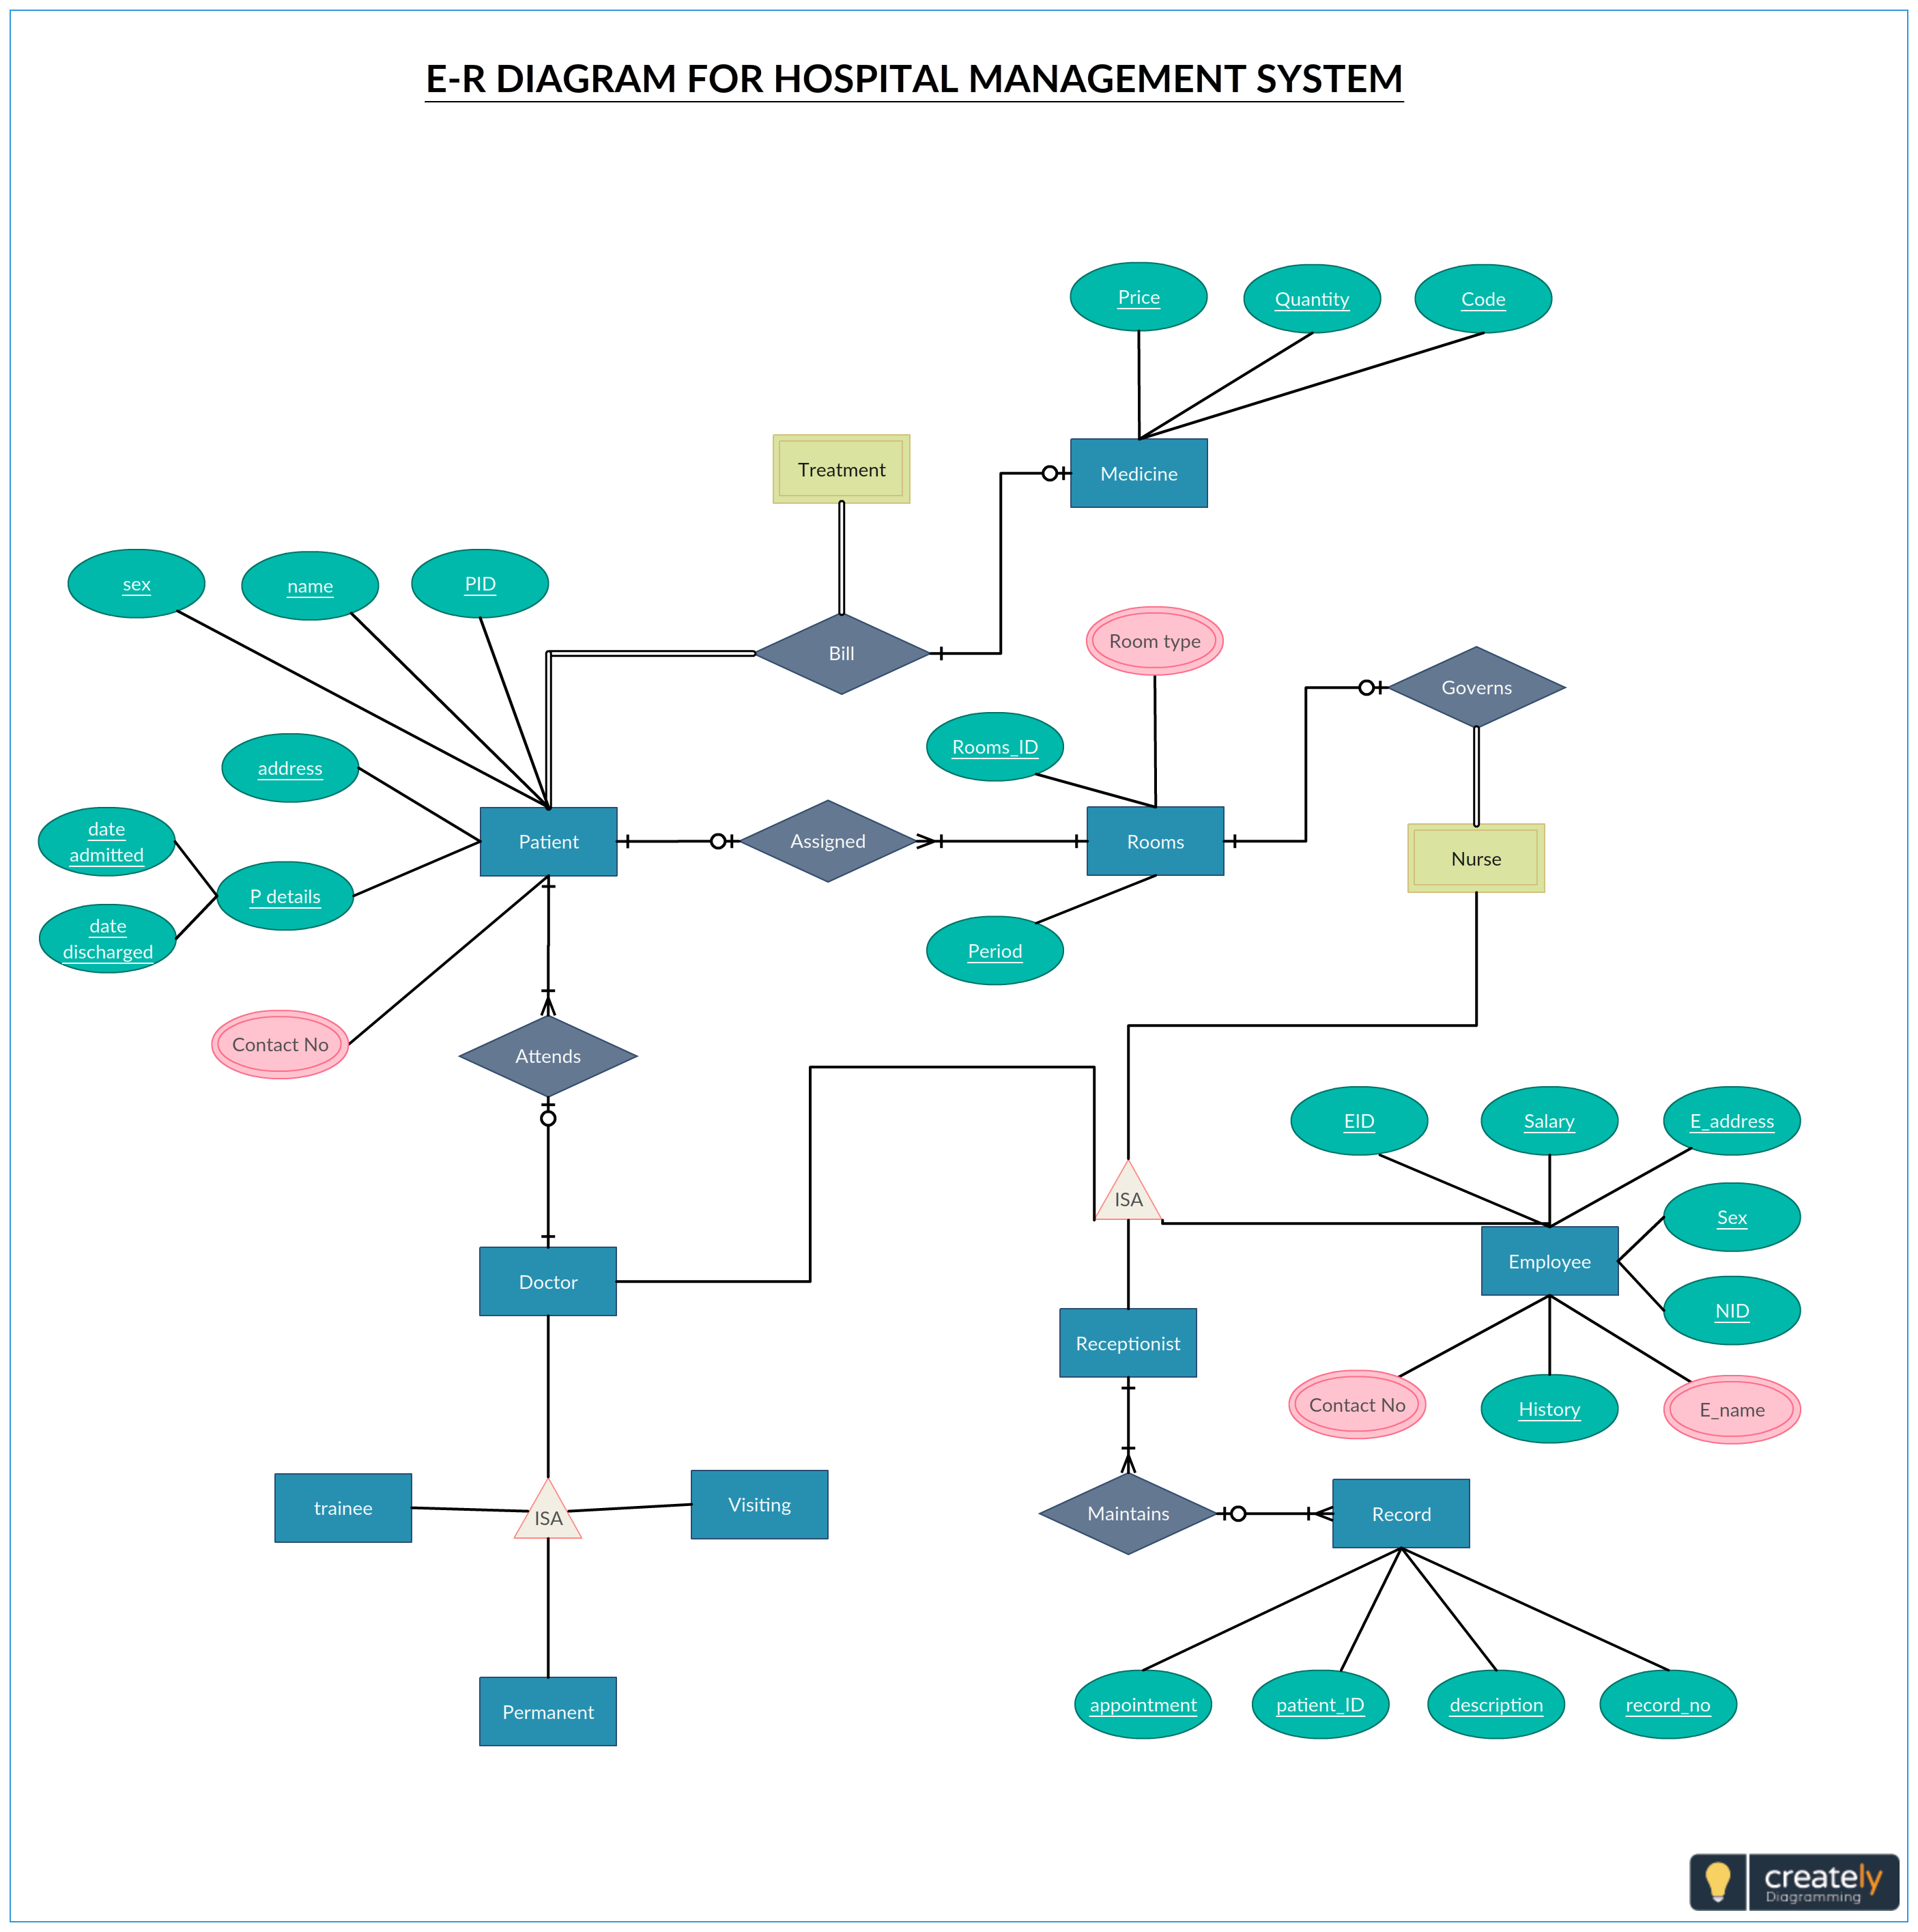 Pincreately On Entity Relationship Diagram Templates intended for Online Erd Diagram Maker